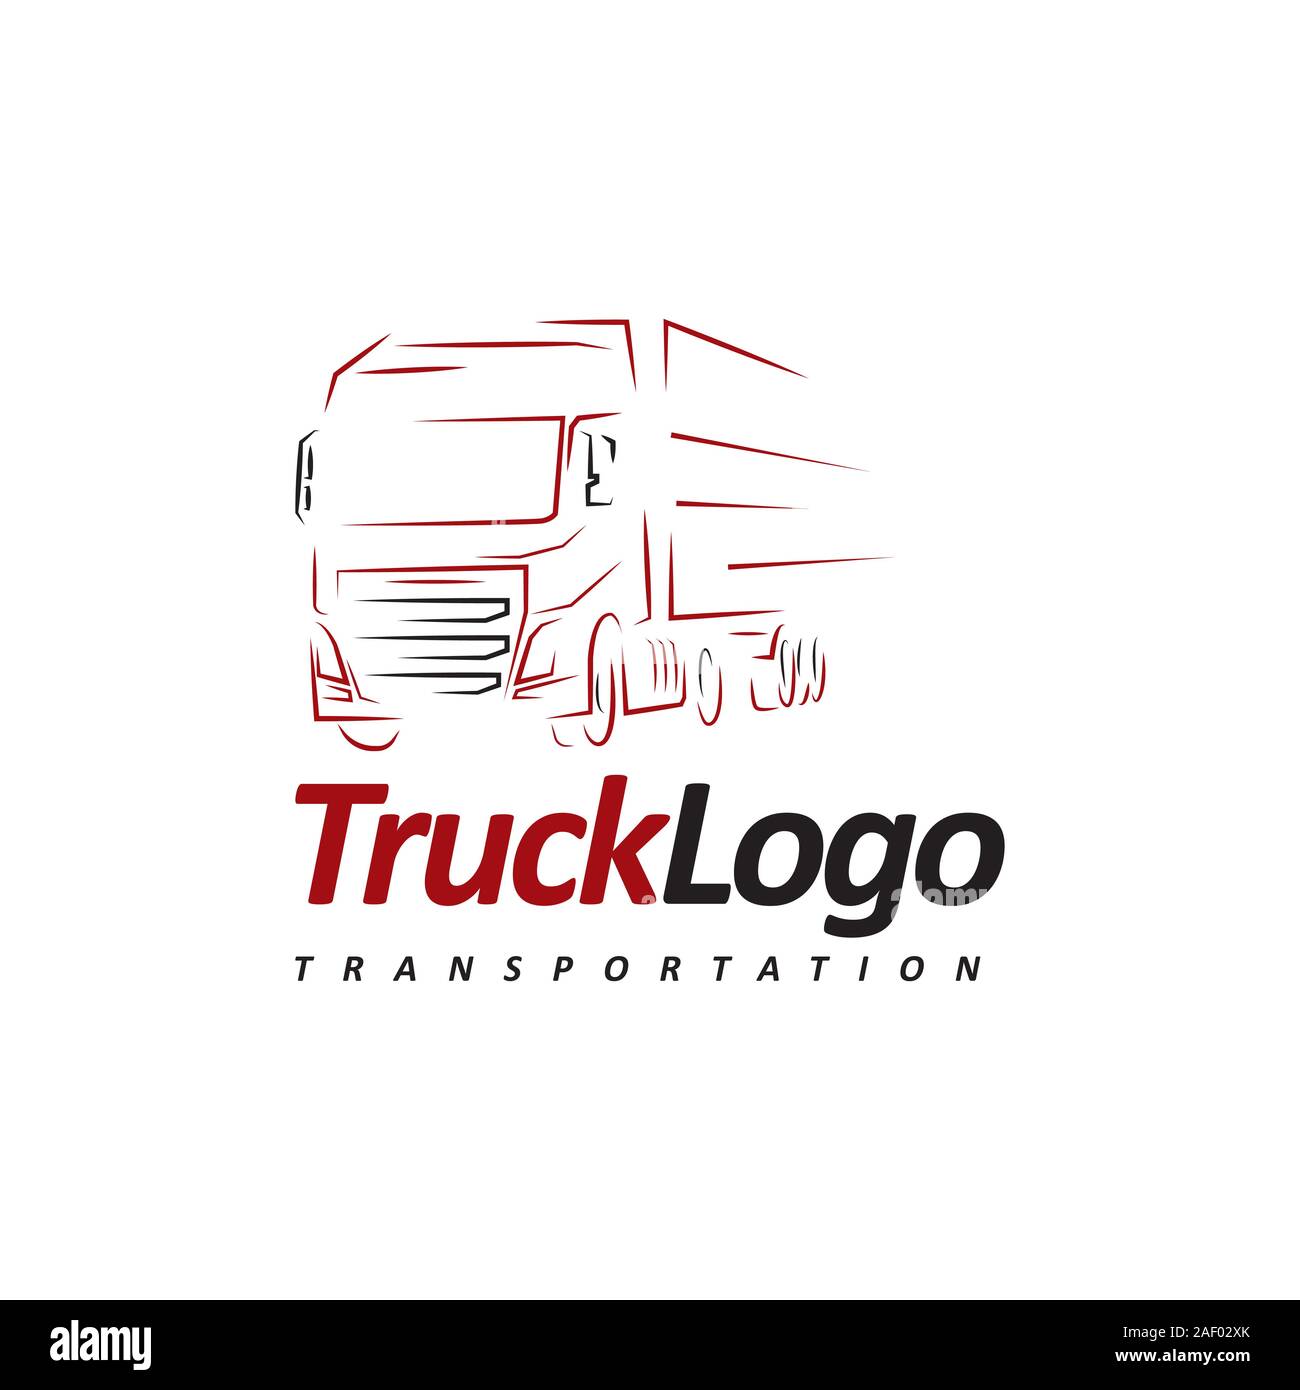 Transport Logo Templates